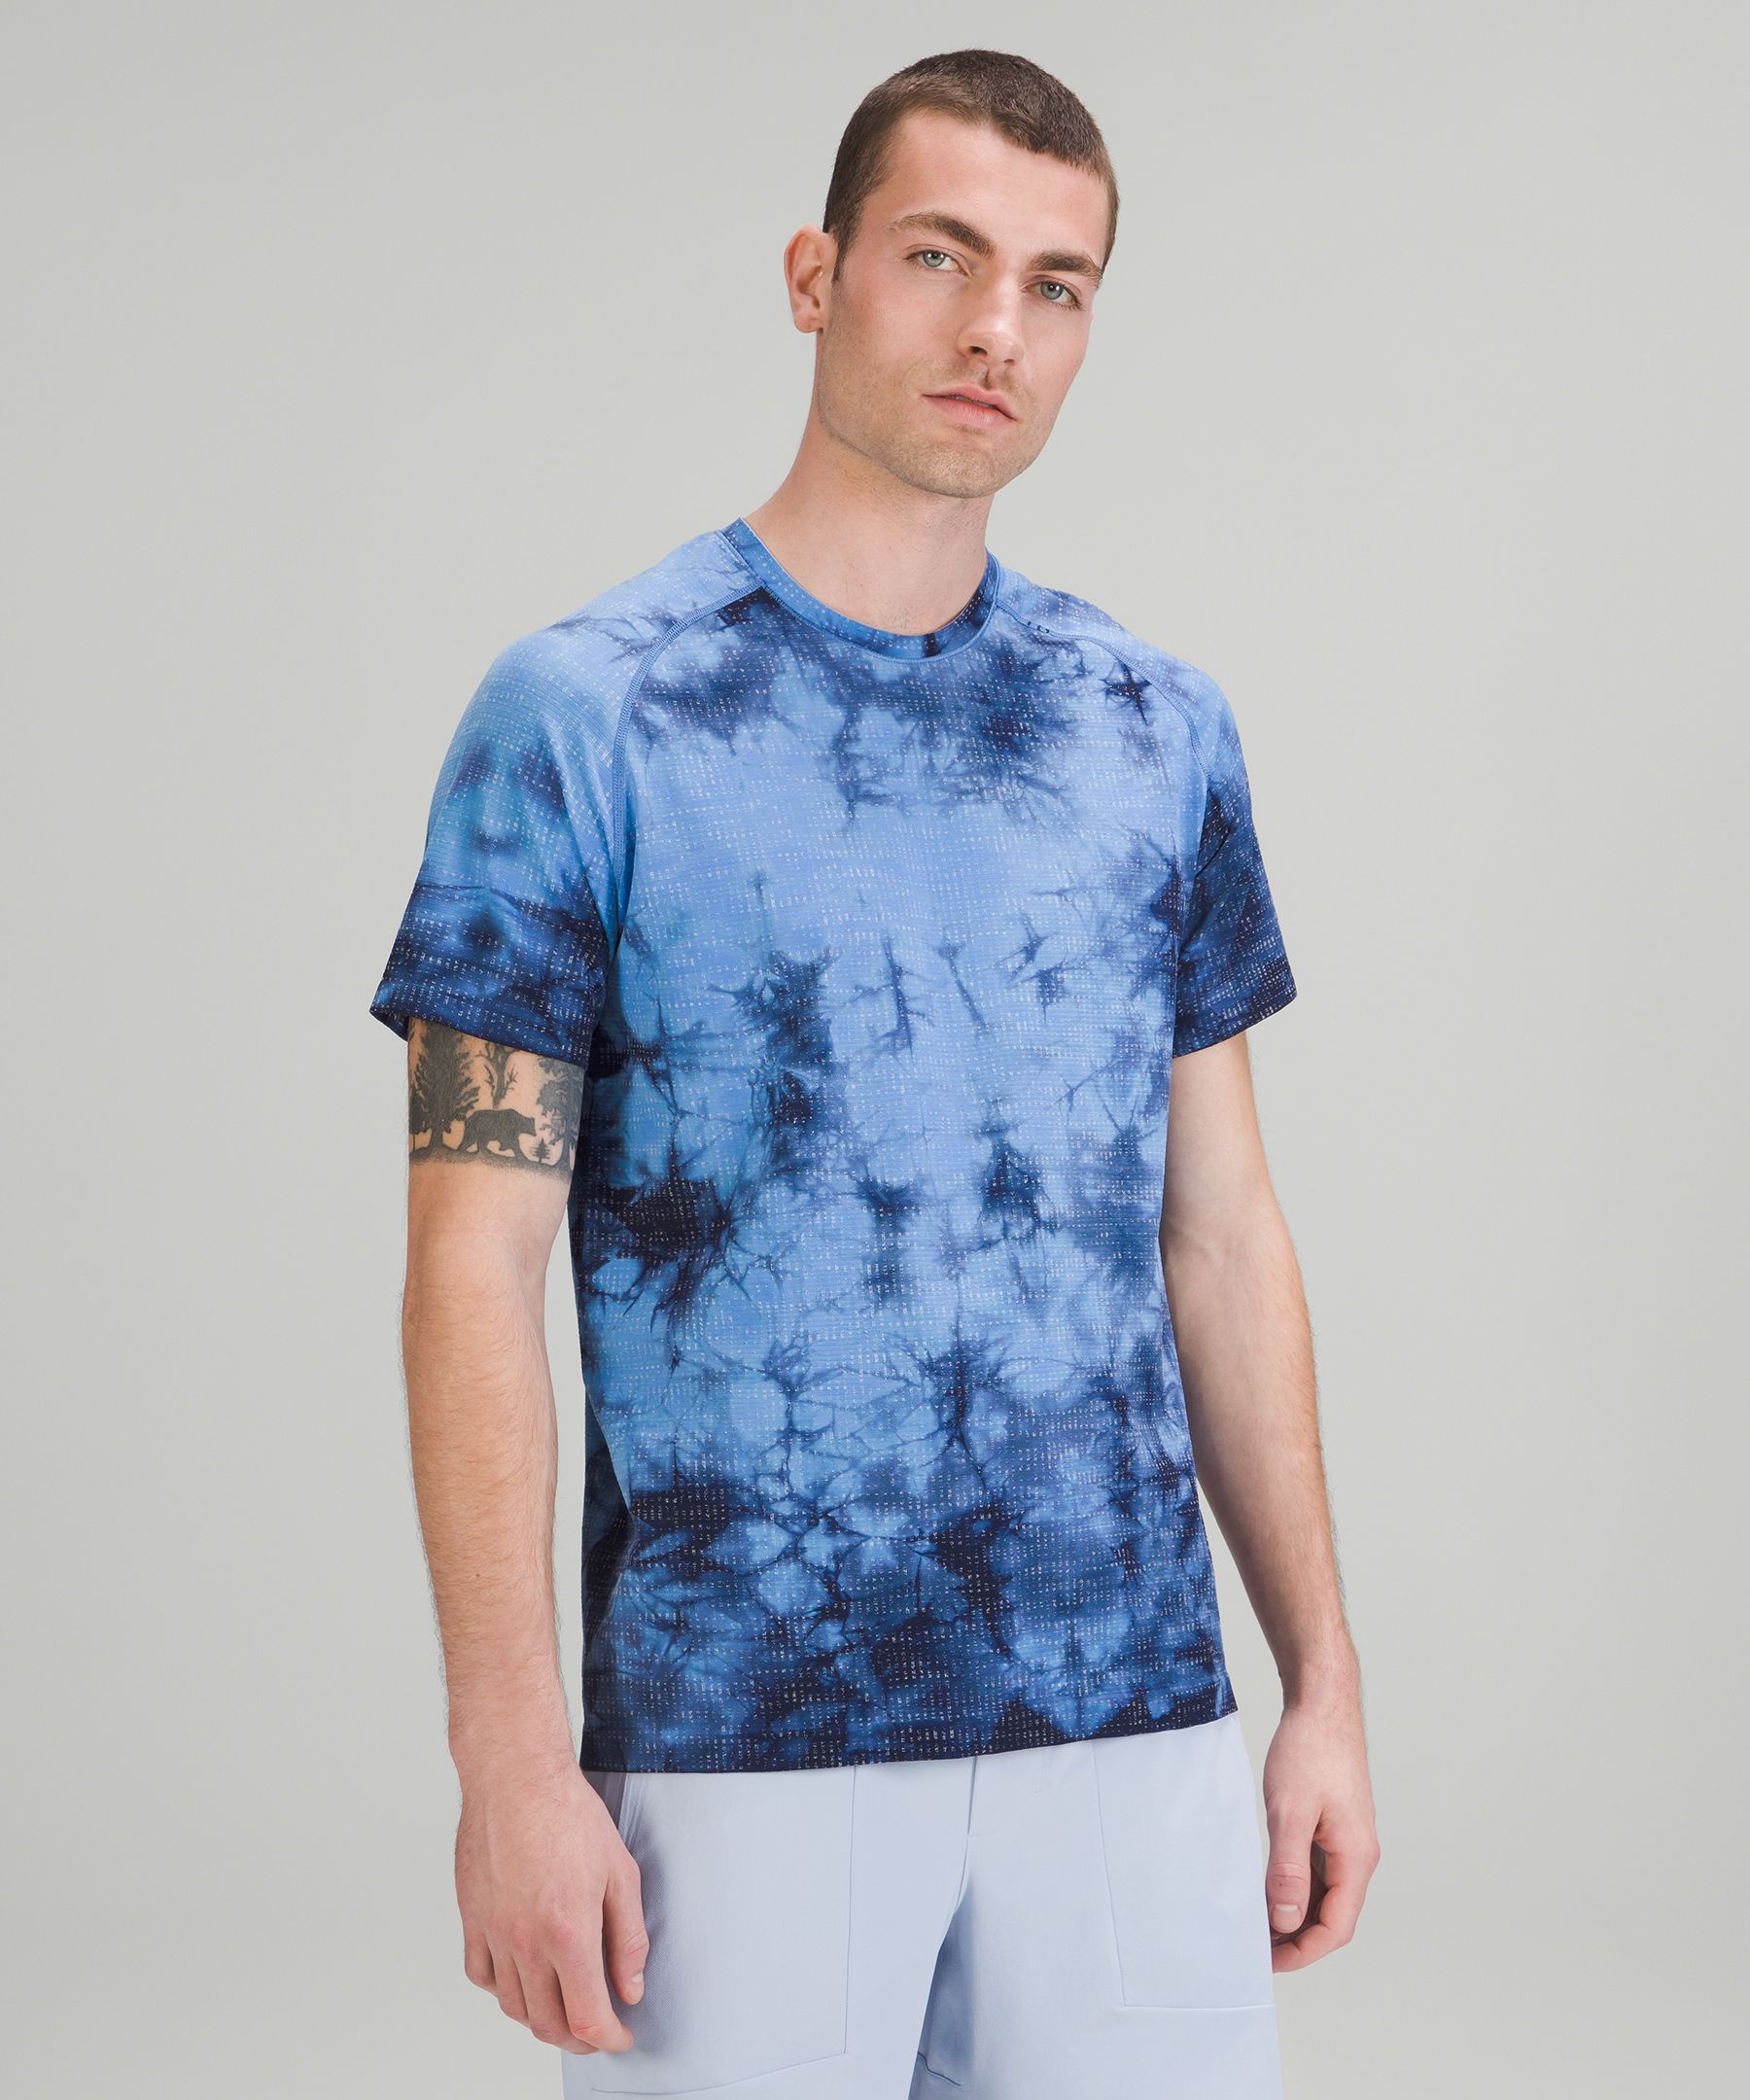 Lululemon Metal Vent Tech Short Sleeve Shirt 2.0 In Disconnect Marble Dye Blue Nile/true Navy